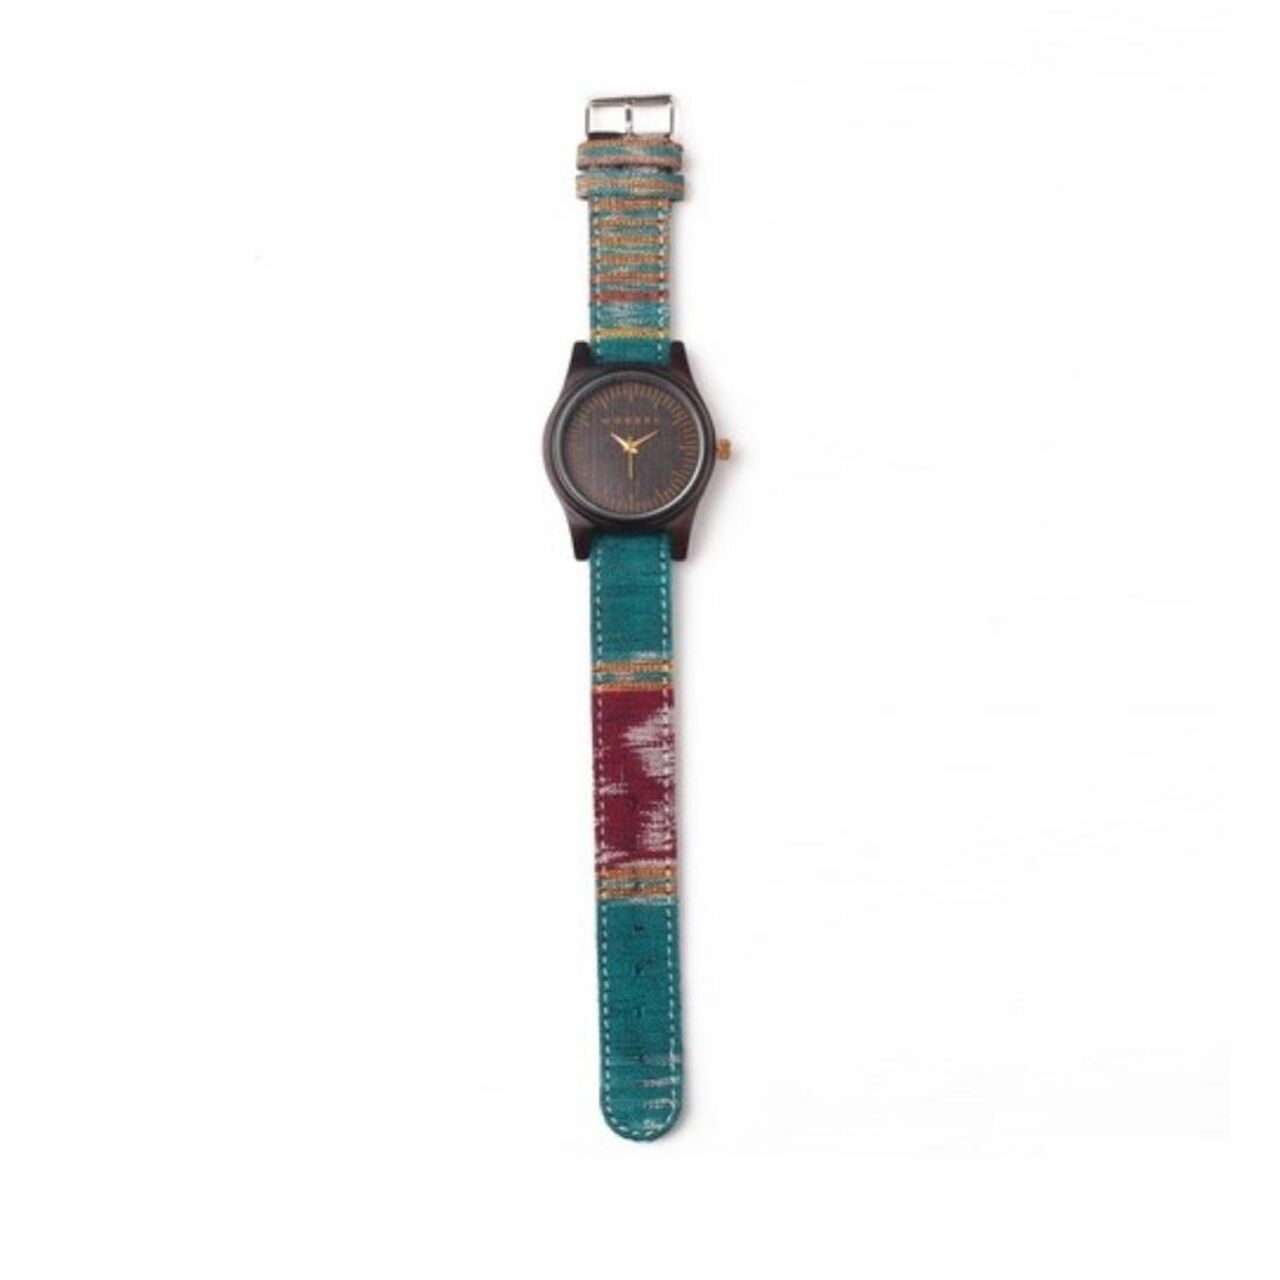 Woodka Loca Sonokeling & Teal Green Orange Tenun Wristwatch